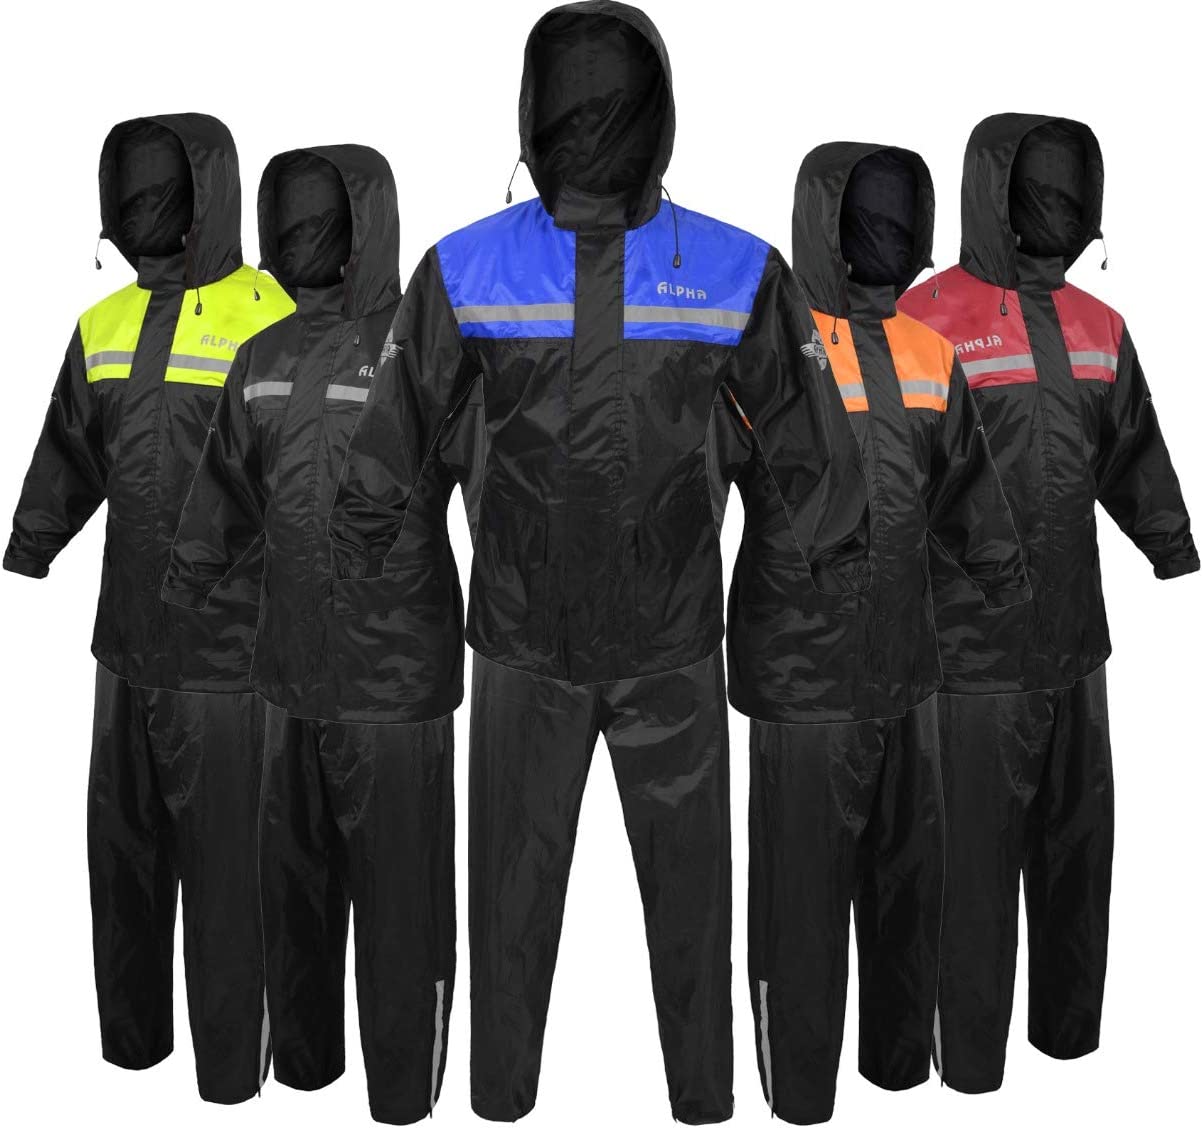 AAlpha Cycle Gear Rain Suit for Men & Women Jackets Pant Gear Reflective Rainsuit Waterproof (BLUE, X-LARGE)